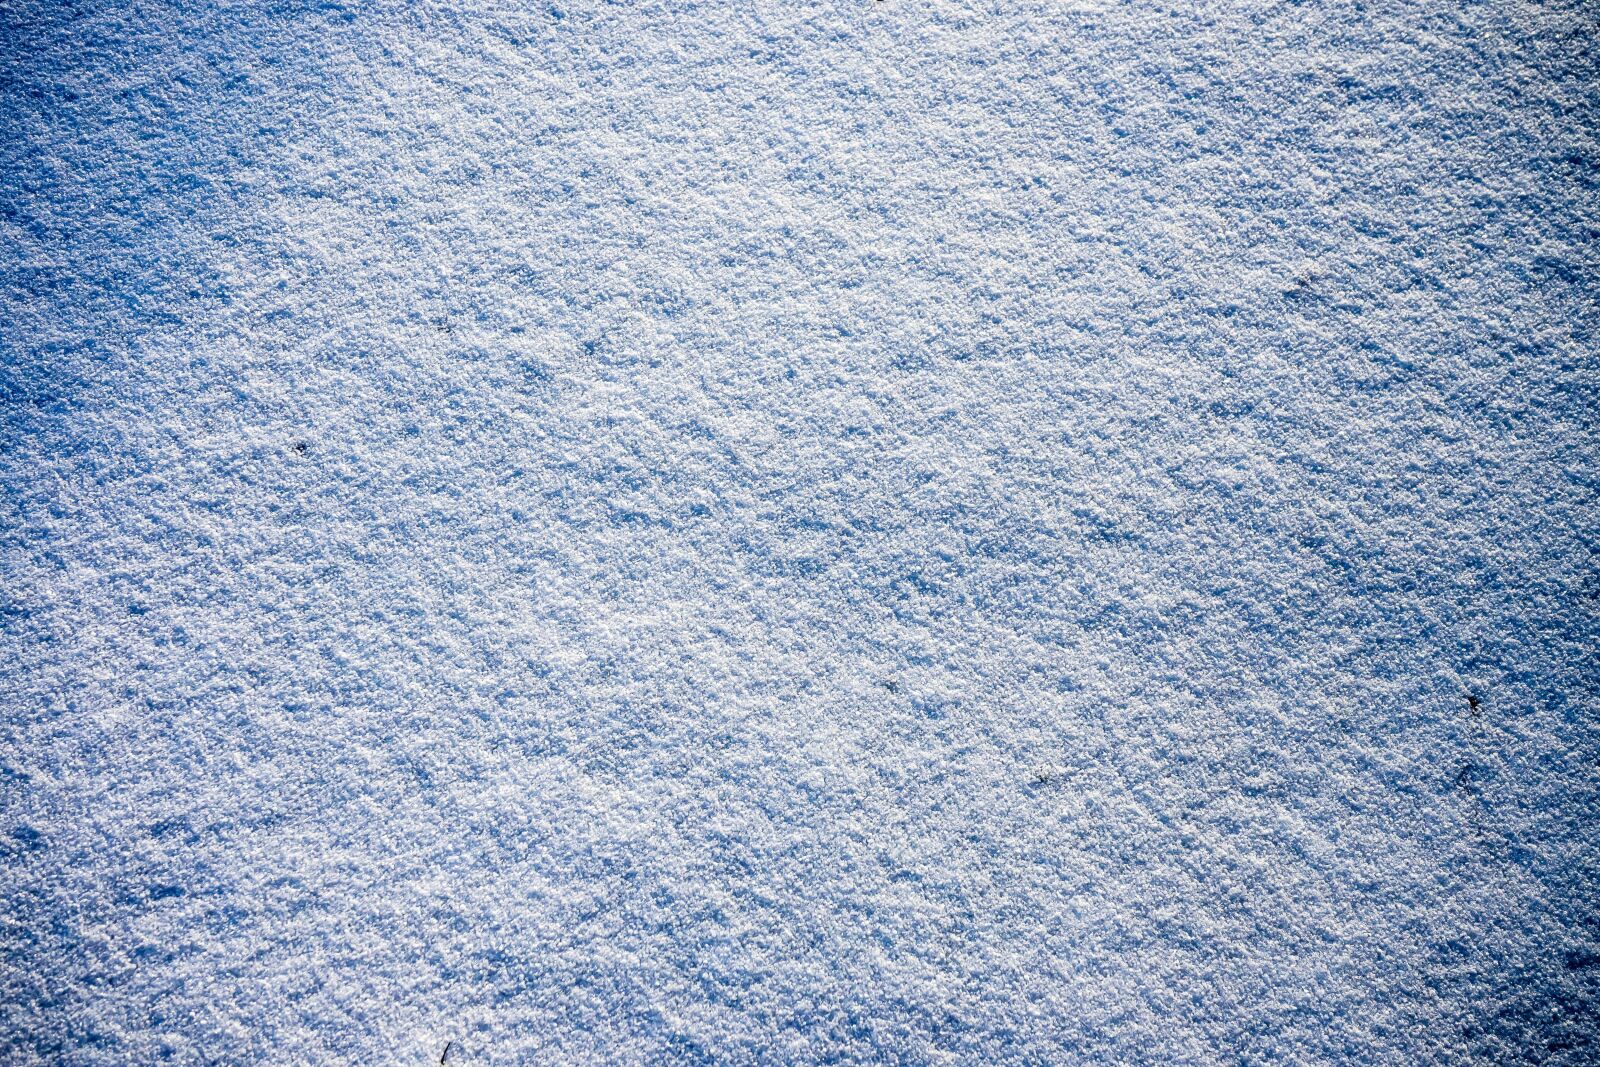 Sony a7 II sample photo. Snow, ice, powder snow photography